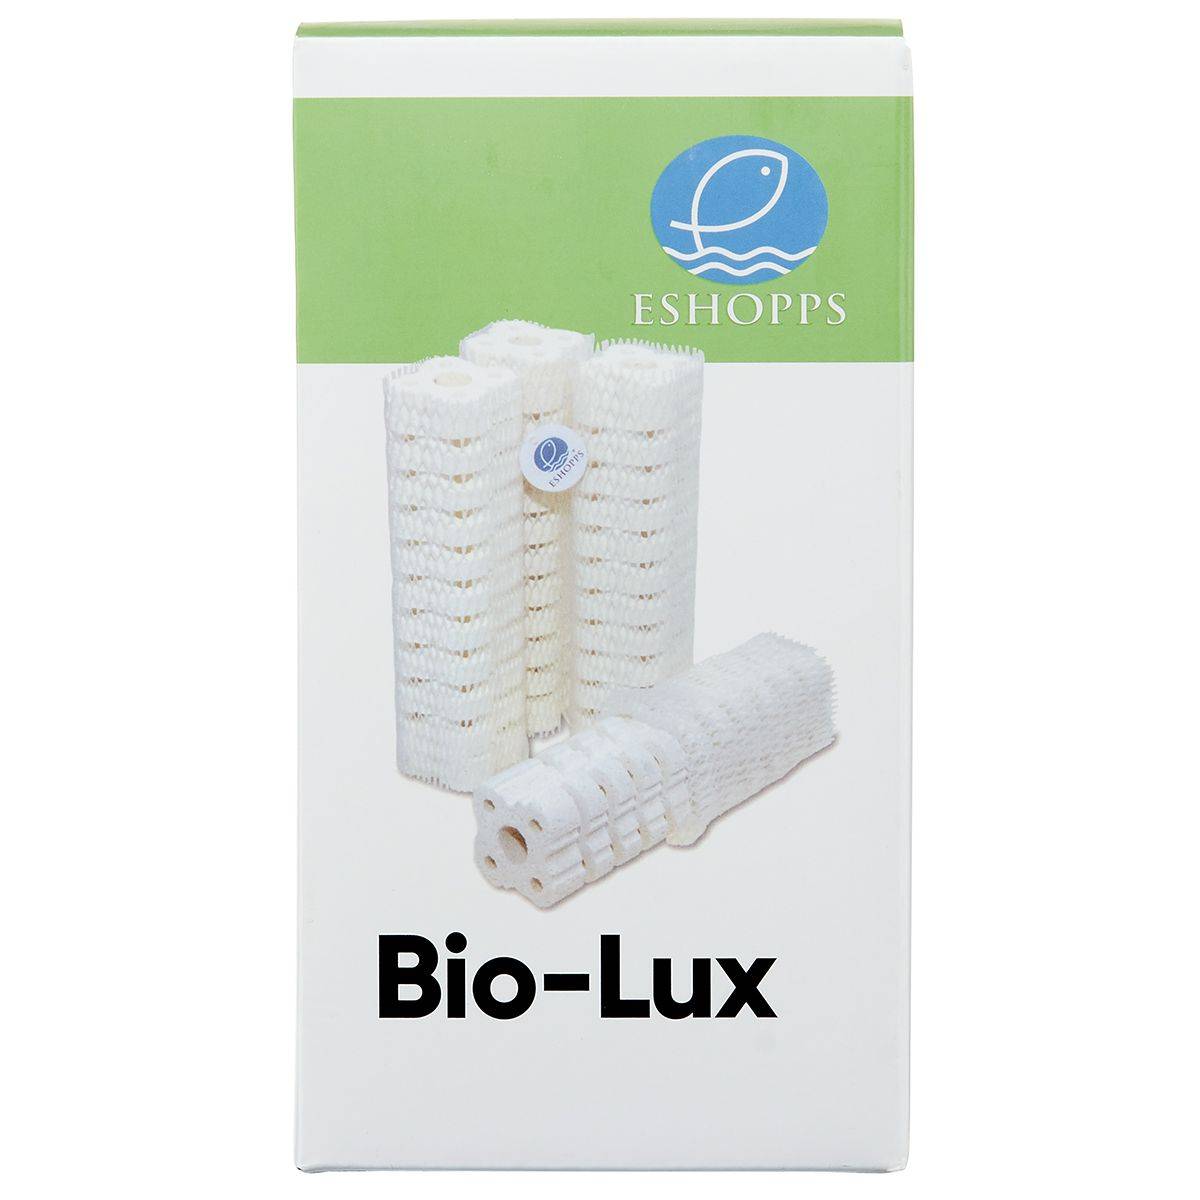 Bio-Lux Ceramic Biomedia - Eshopps